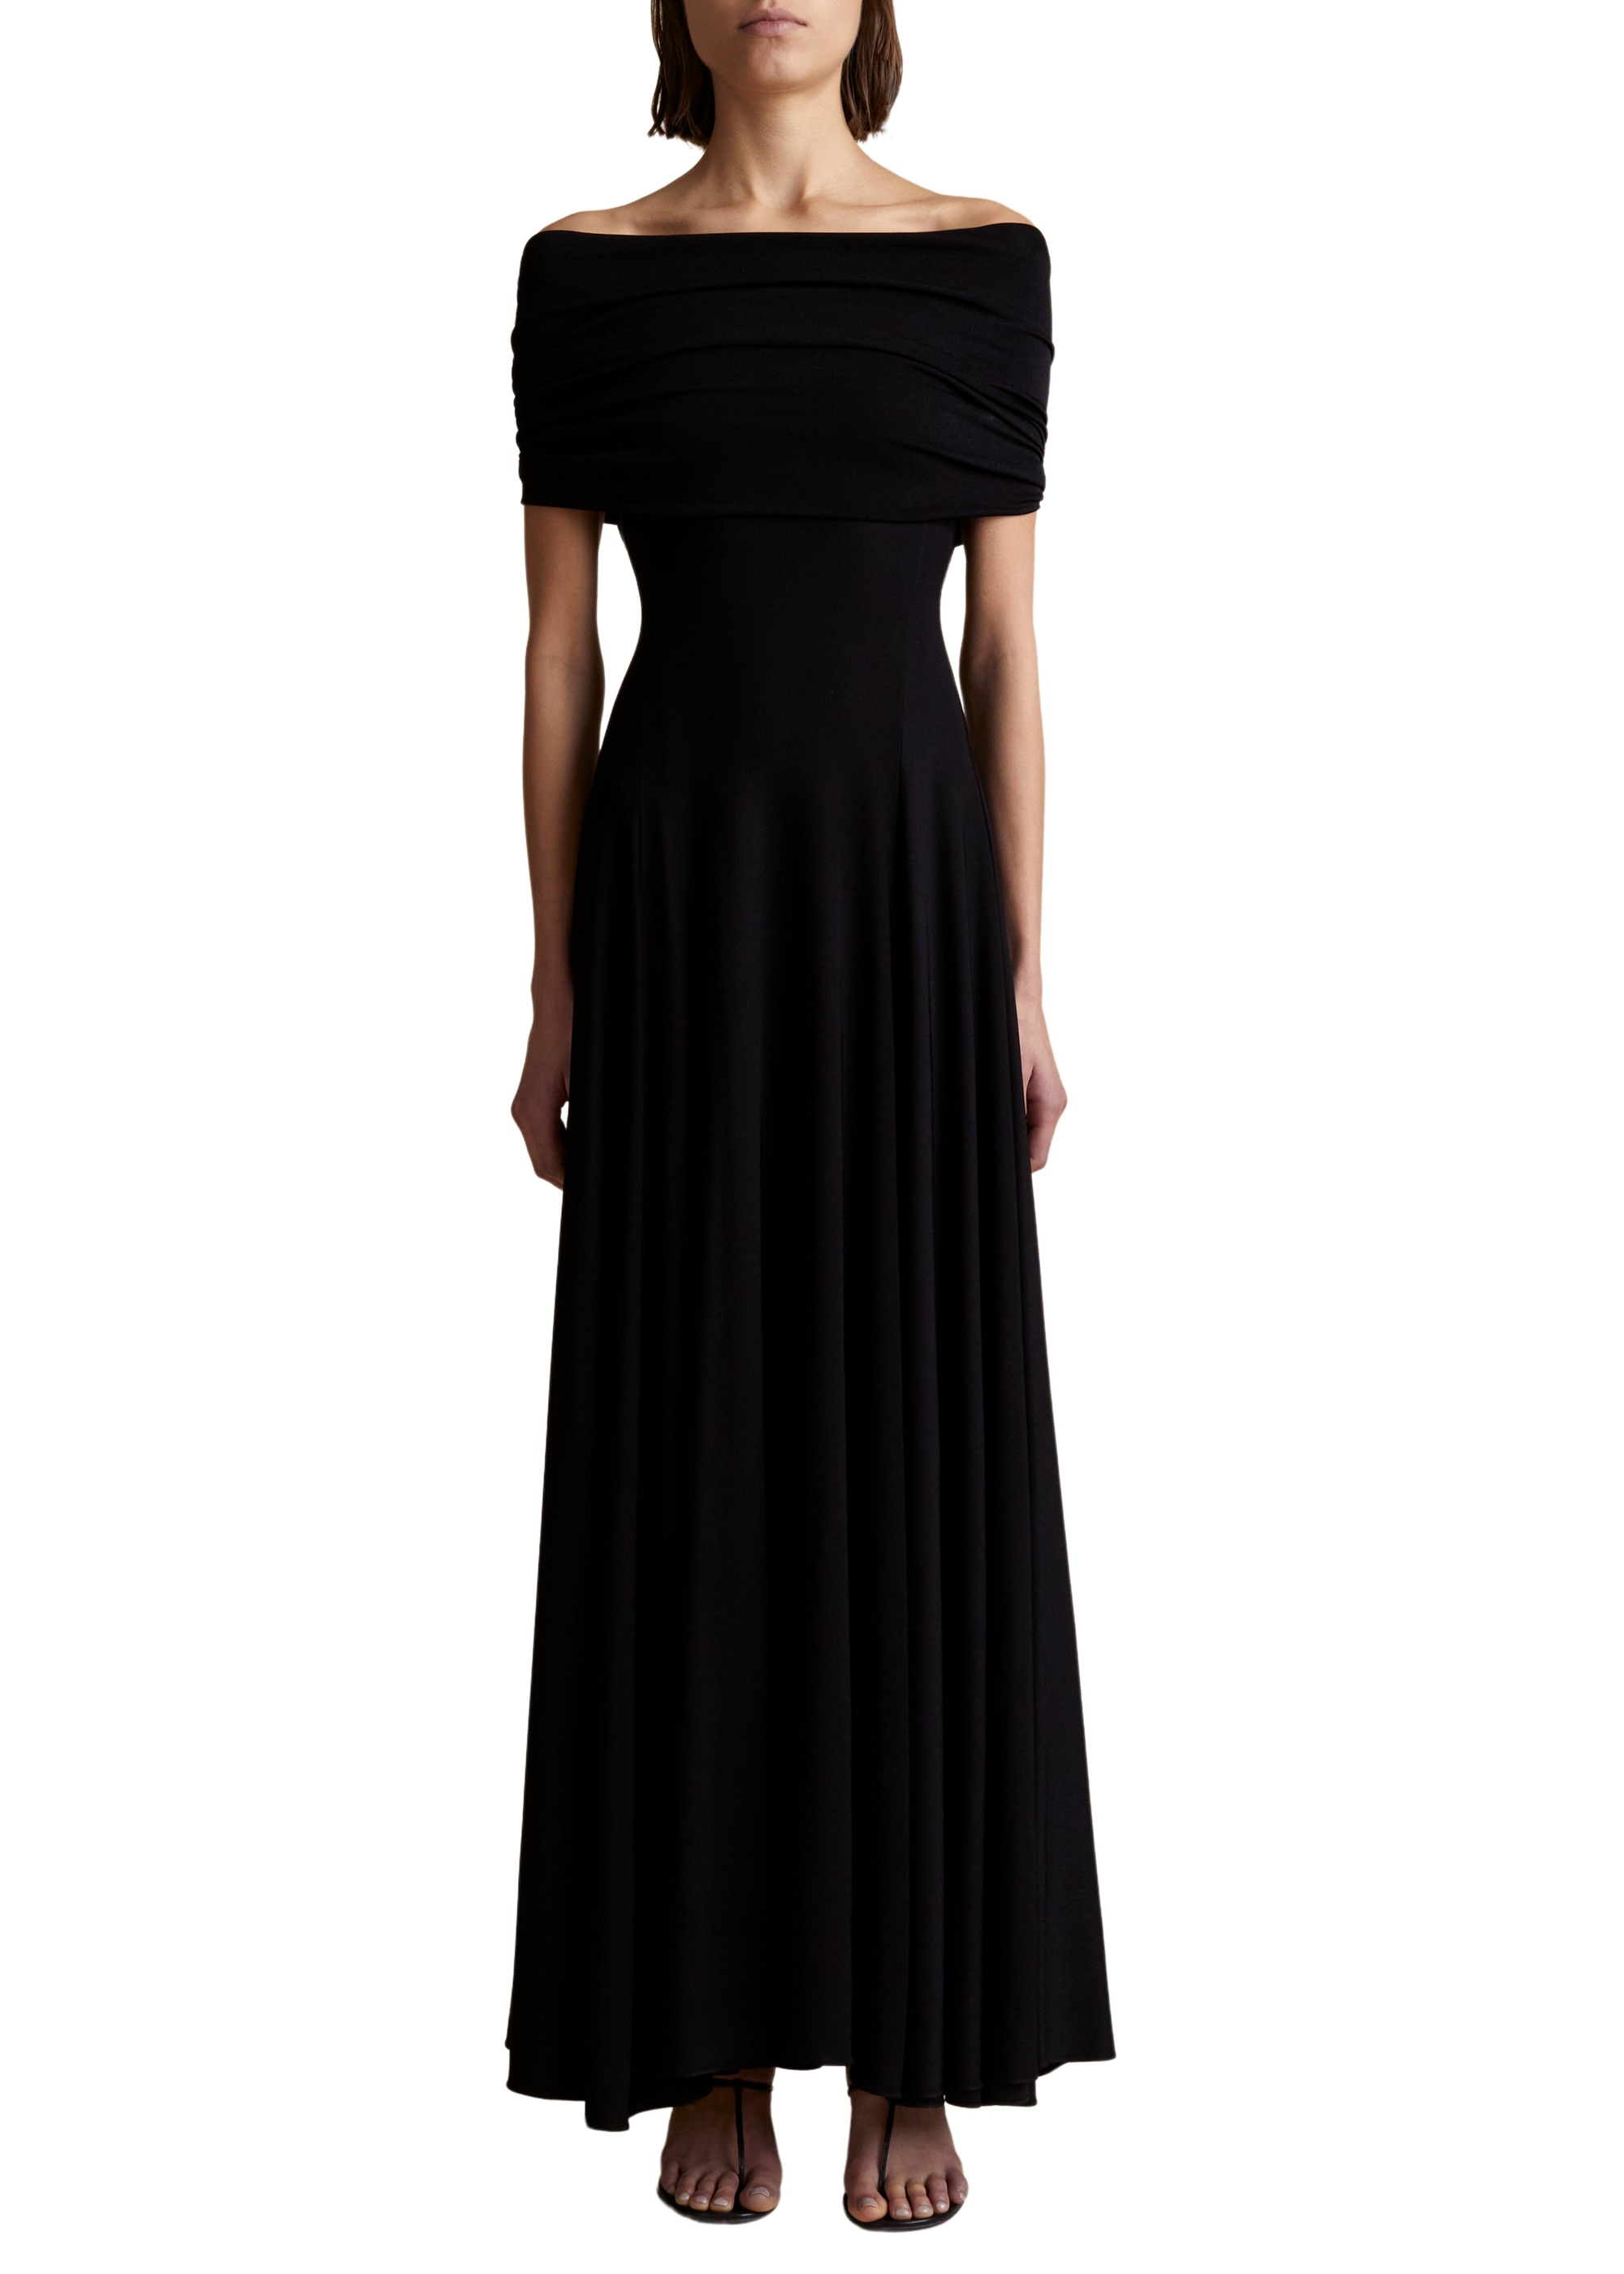 Bridgit dress - Black